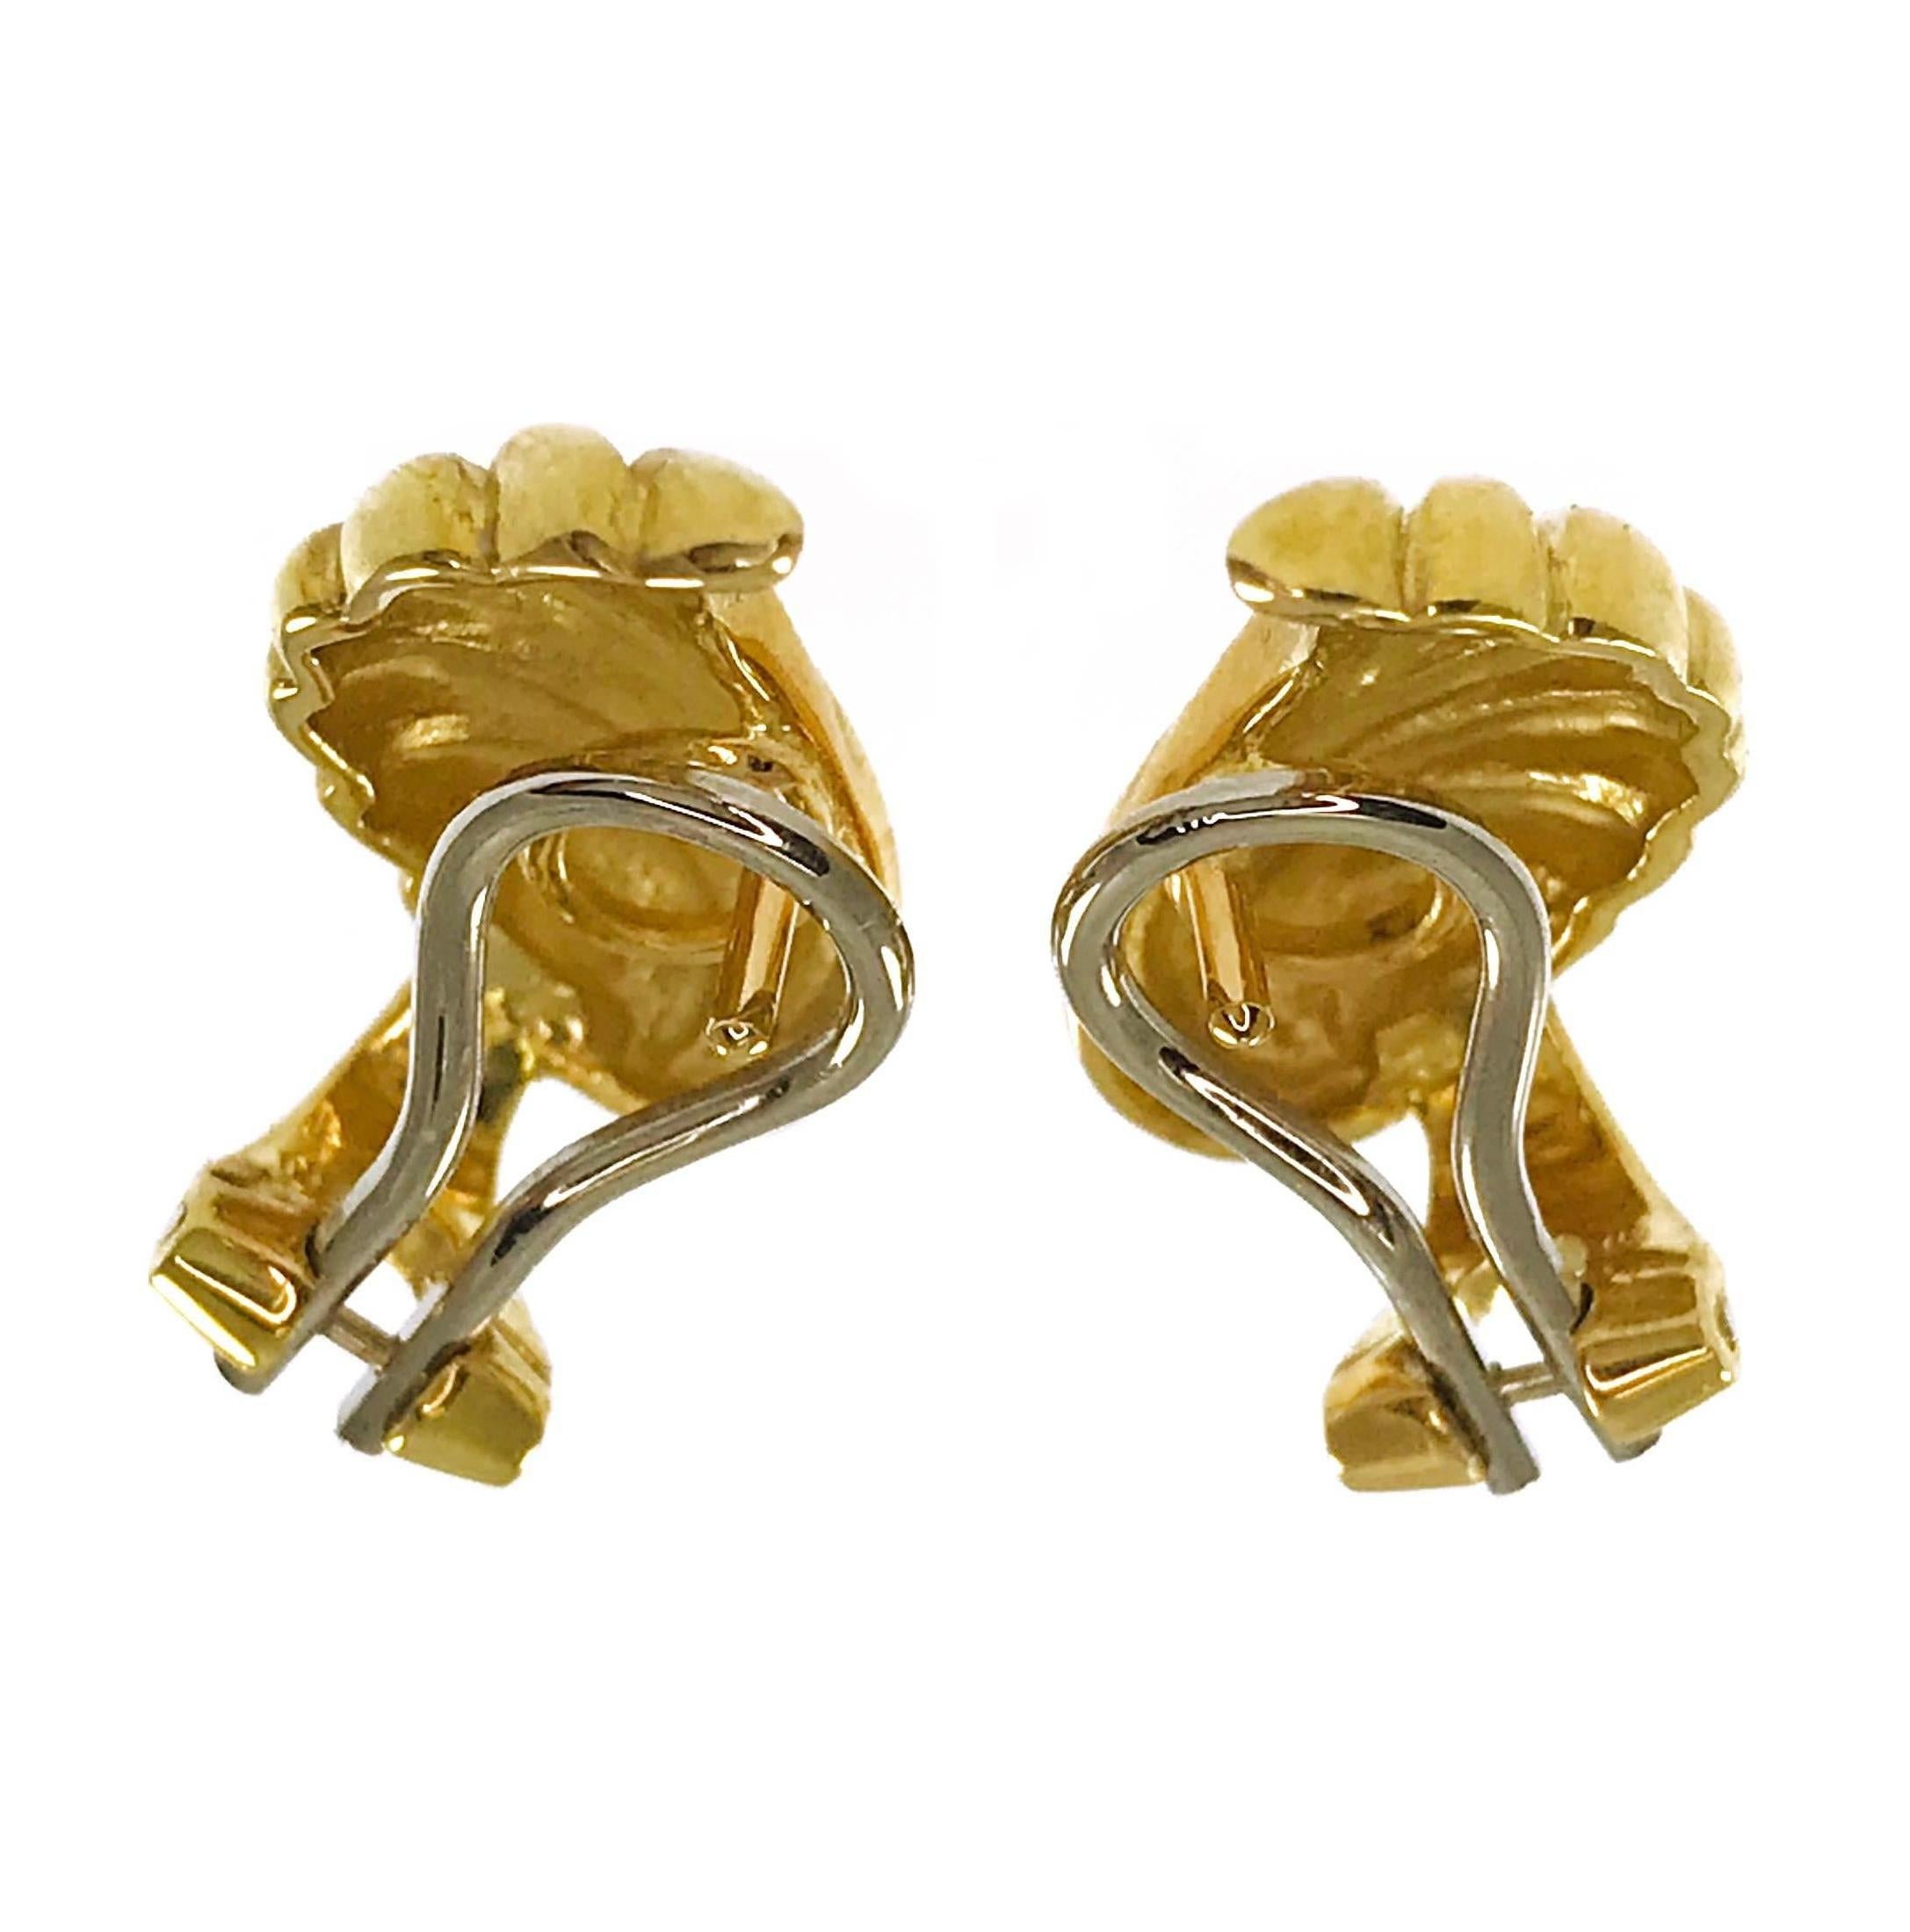 Gubelin 18 Karat Wing-Shaped Earrings In Good Condition For Sale In Palm Desert, CA